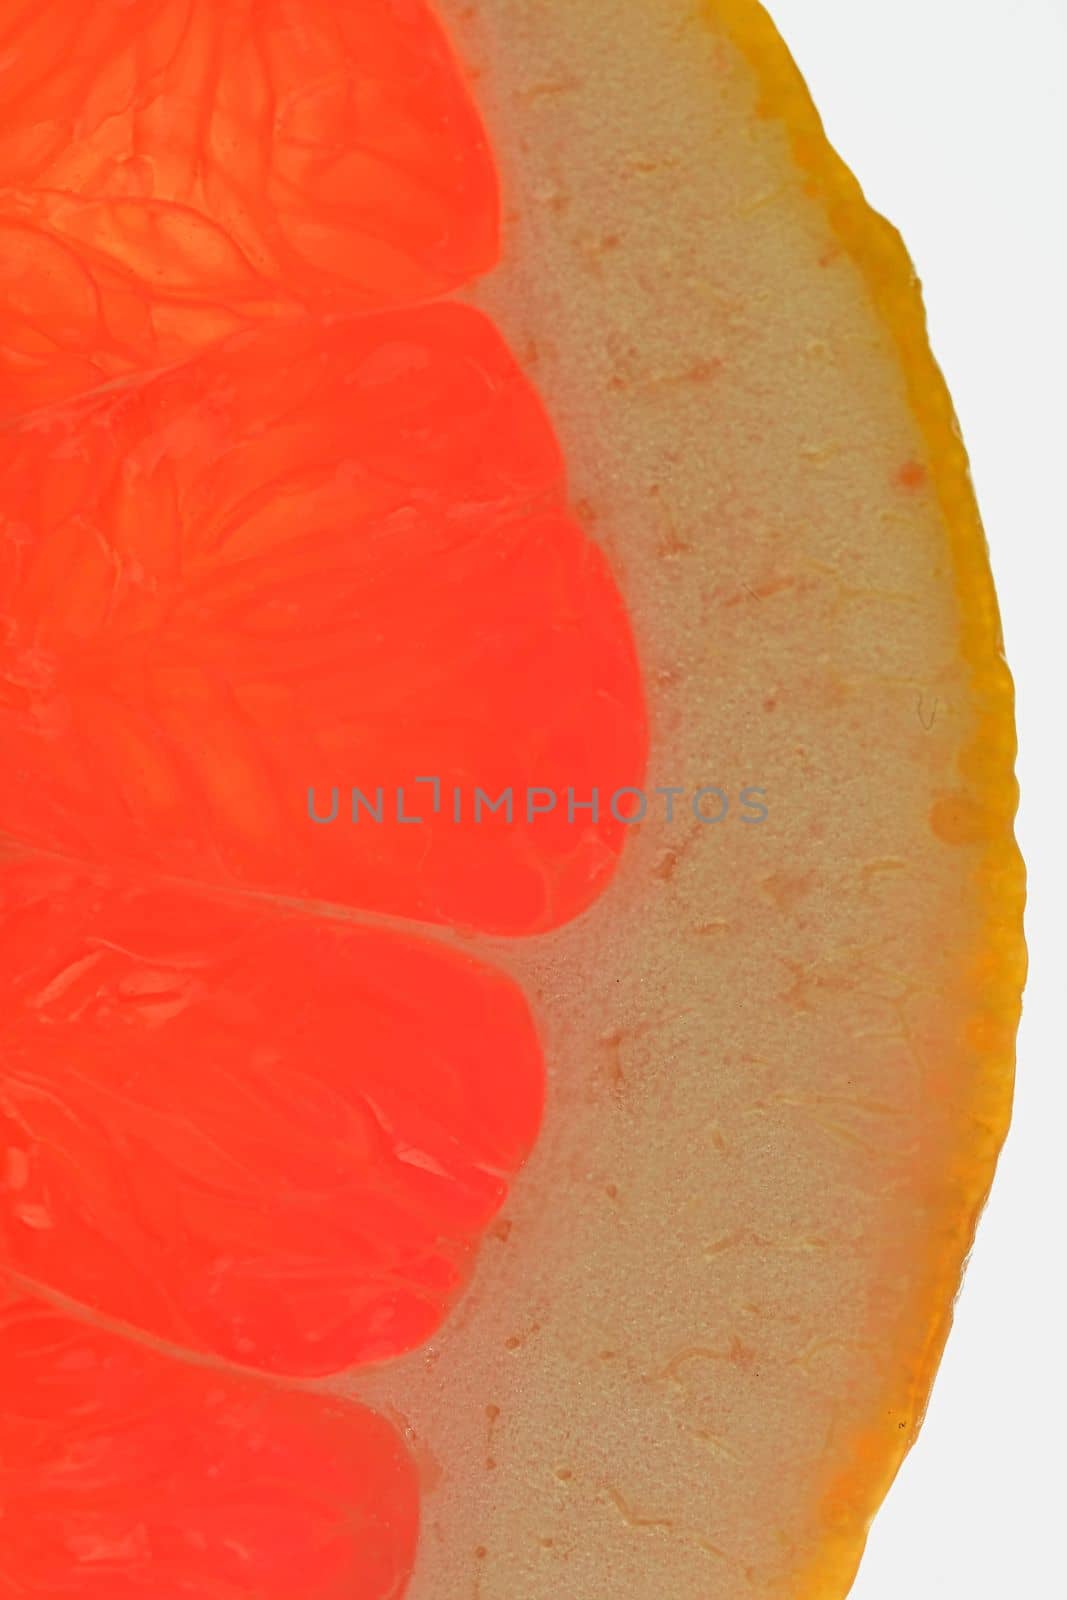 Grapefruit. Fresh organic grapefruit slice on white background. Grapefruit close-up. Slice of blood red ripe grapefruit. Texture of red juicy grapefruit. Macro verical image by roman_nerud